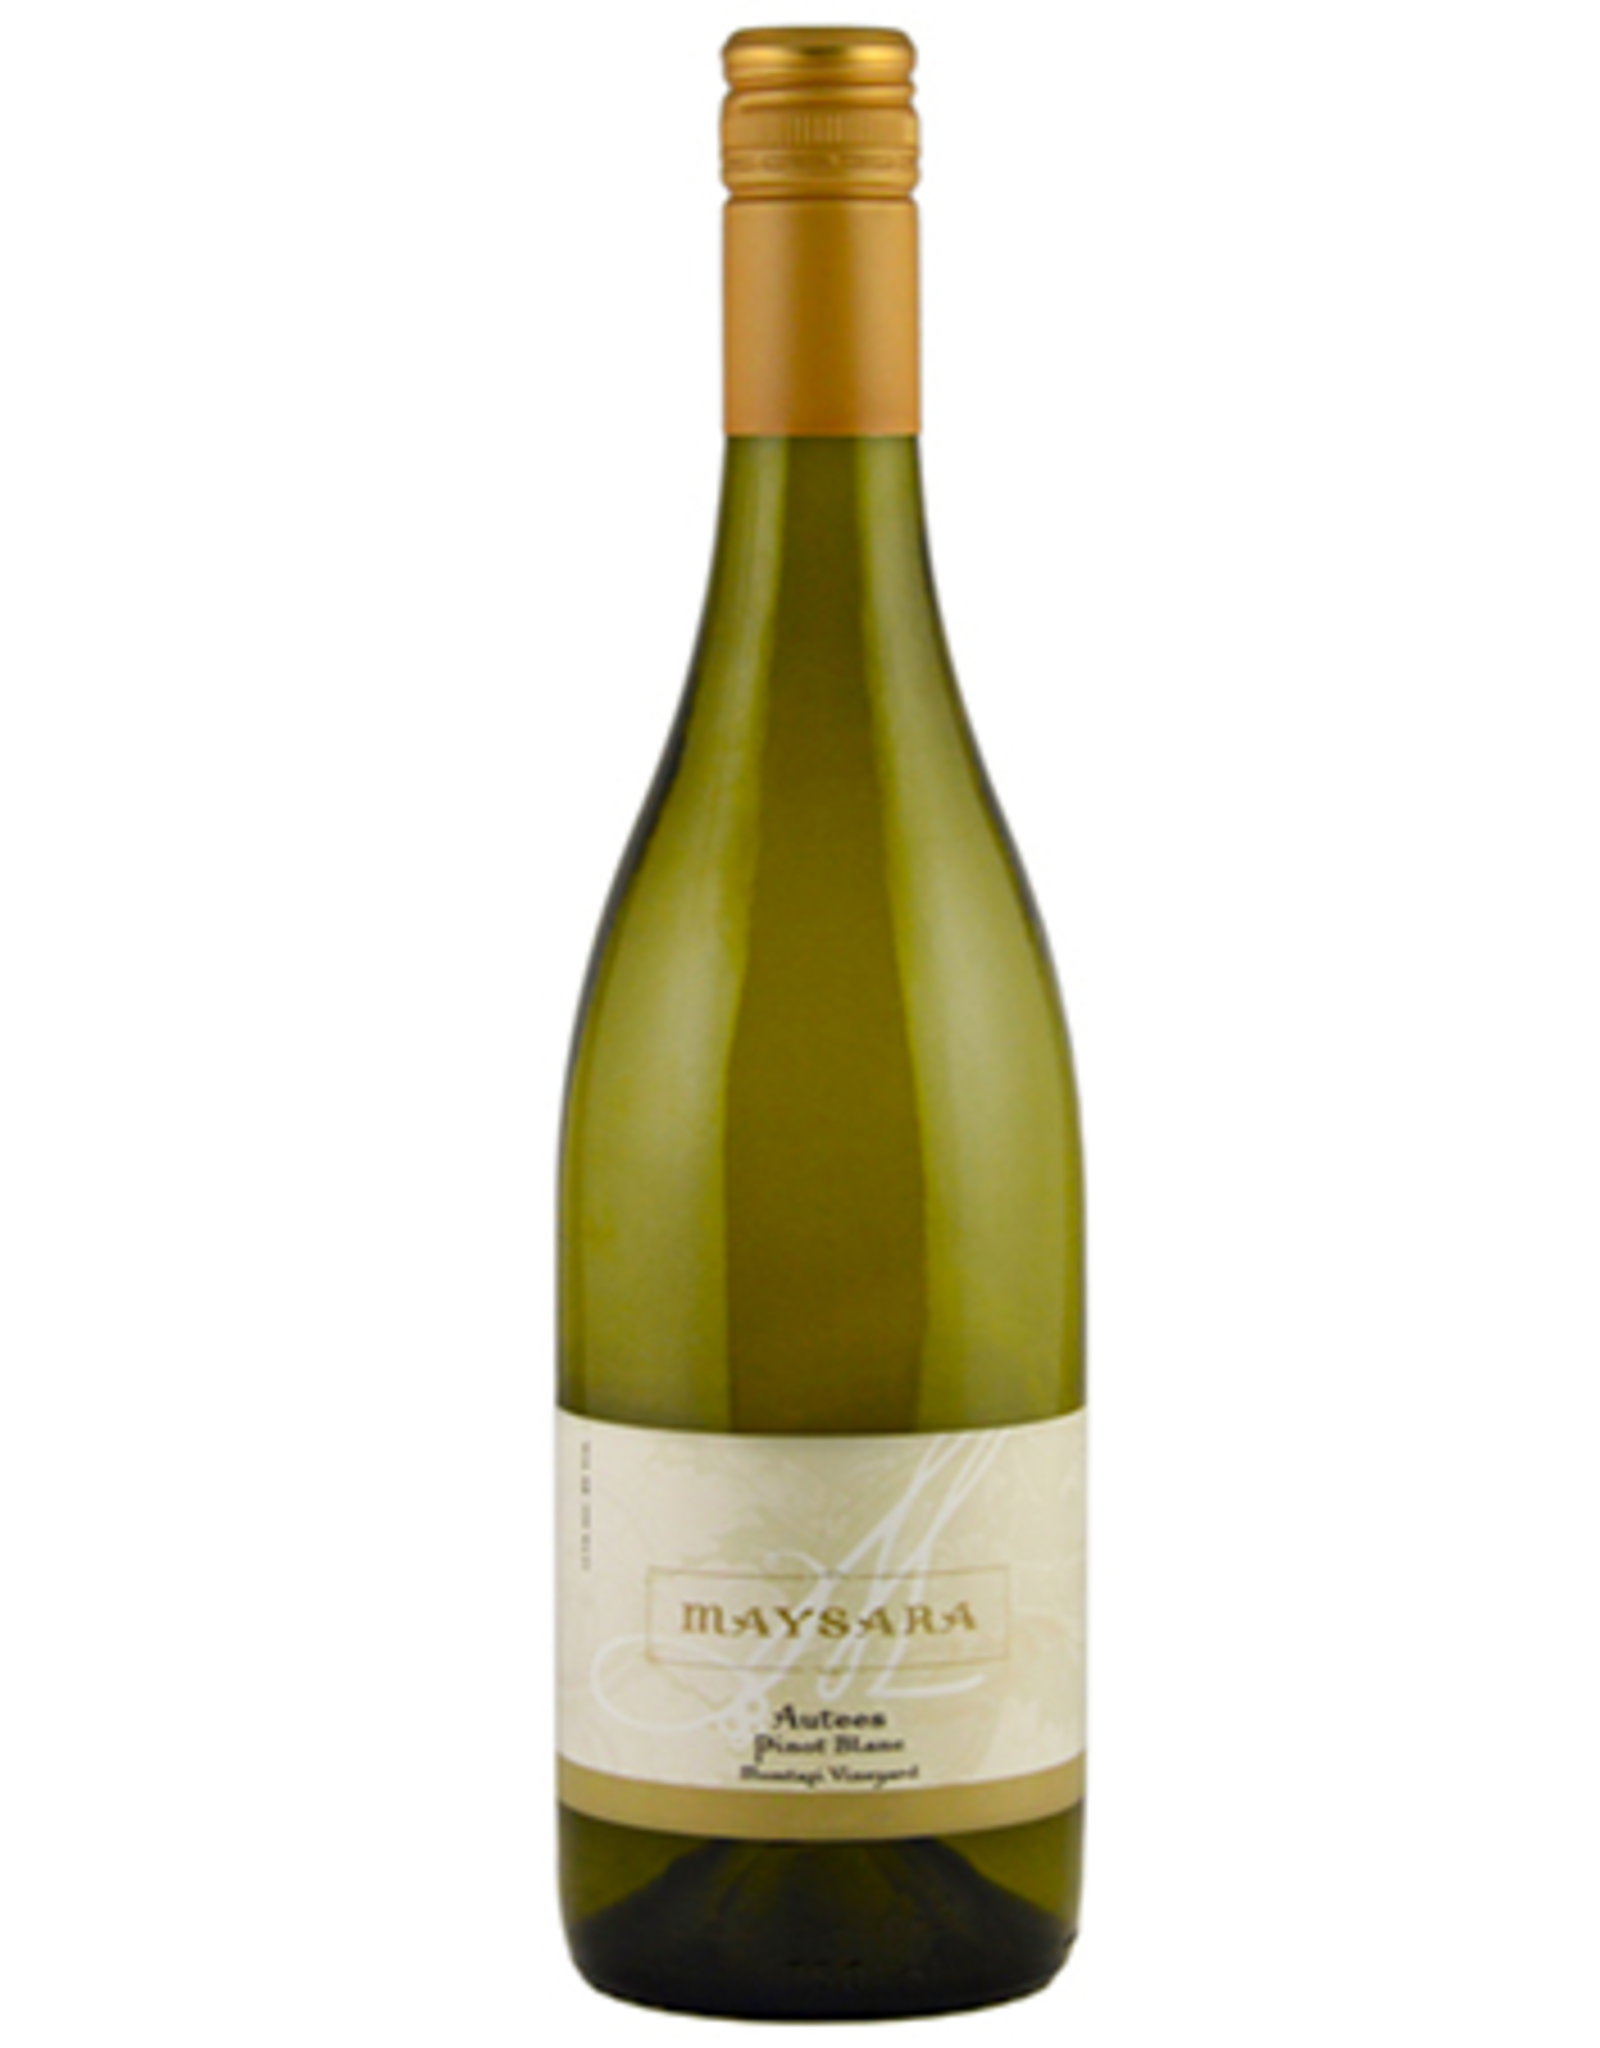 Maysara Pinot Blanc “Autees” Willamette Valley 2021